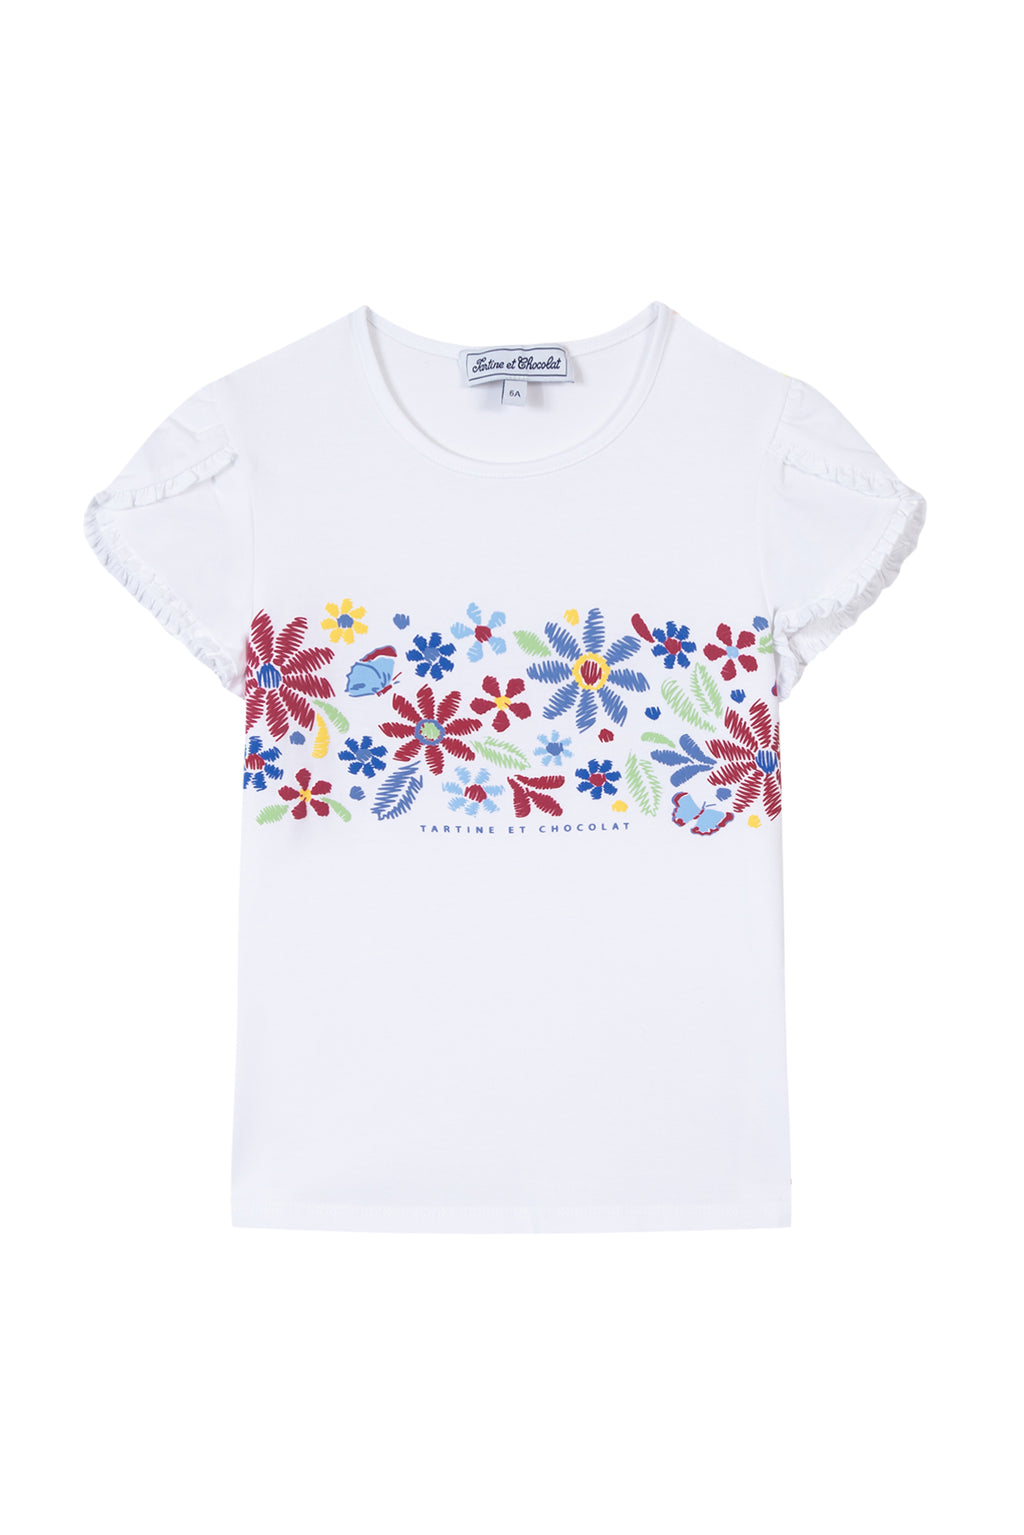 T -Shirt - Bougainvillier Illustration Blume